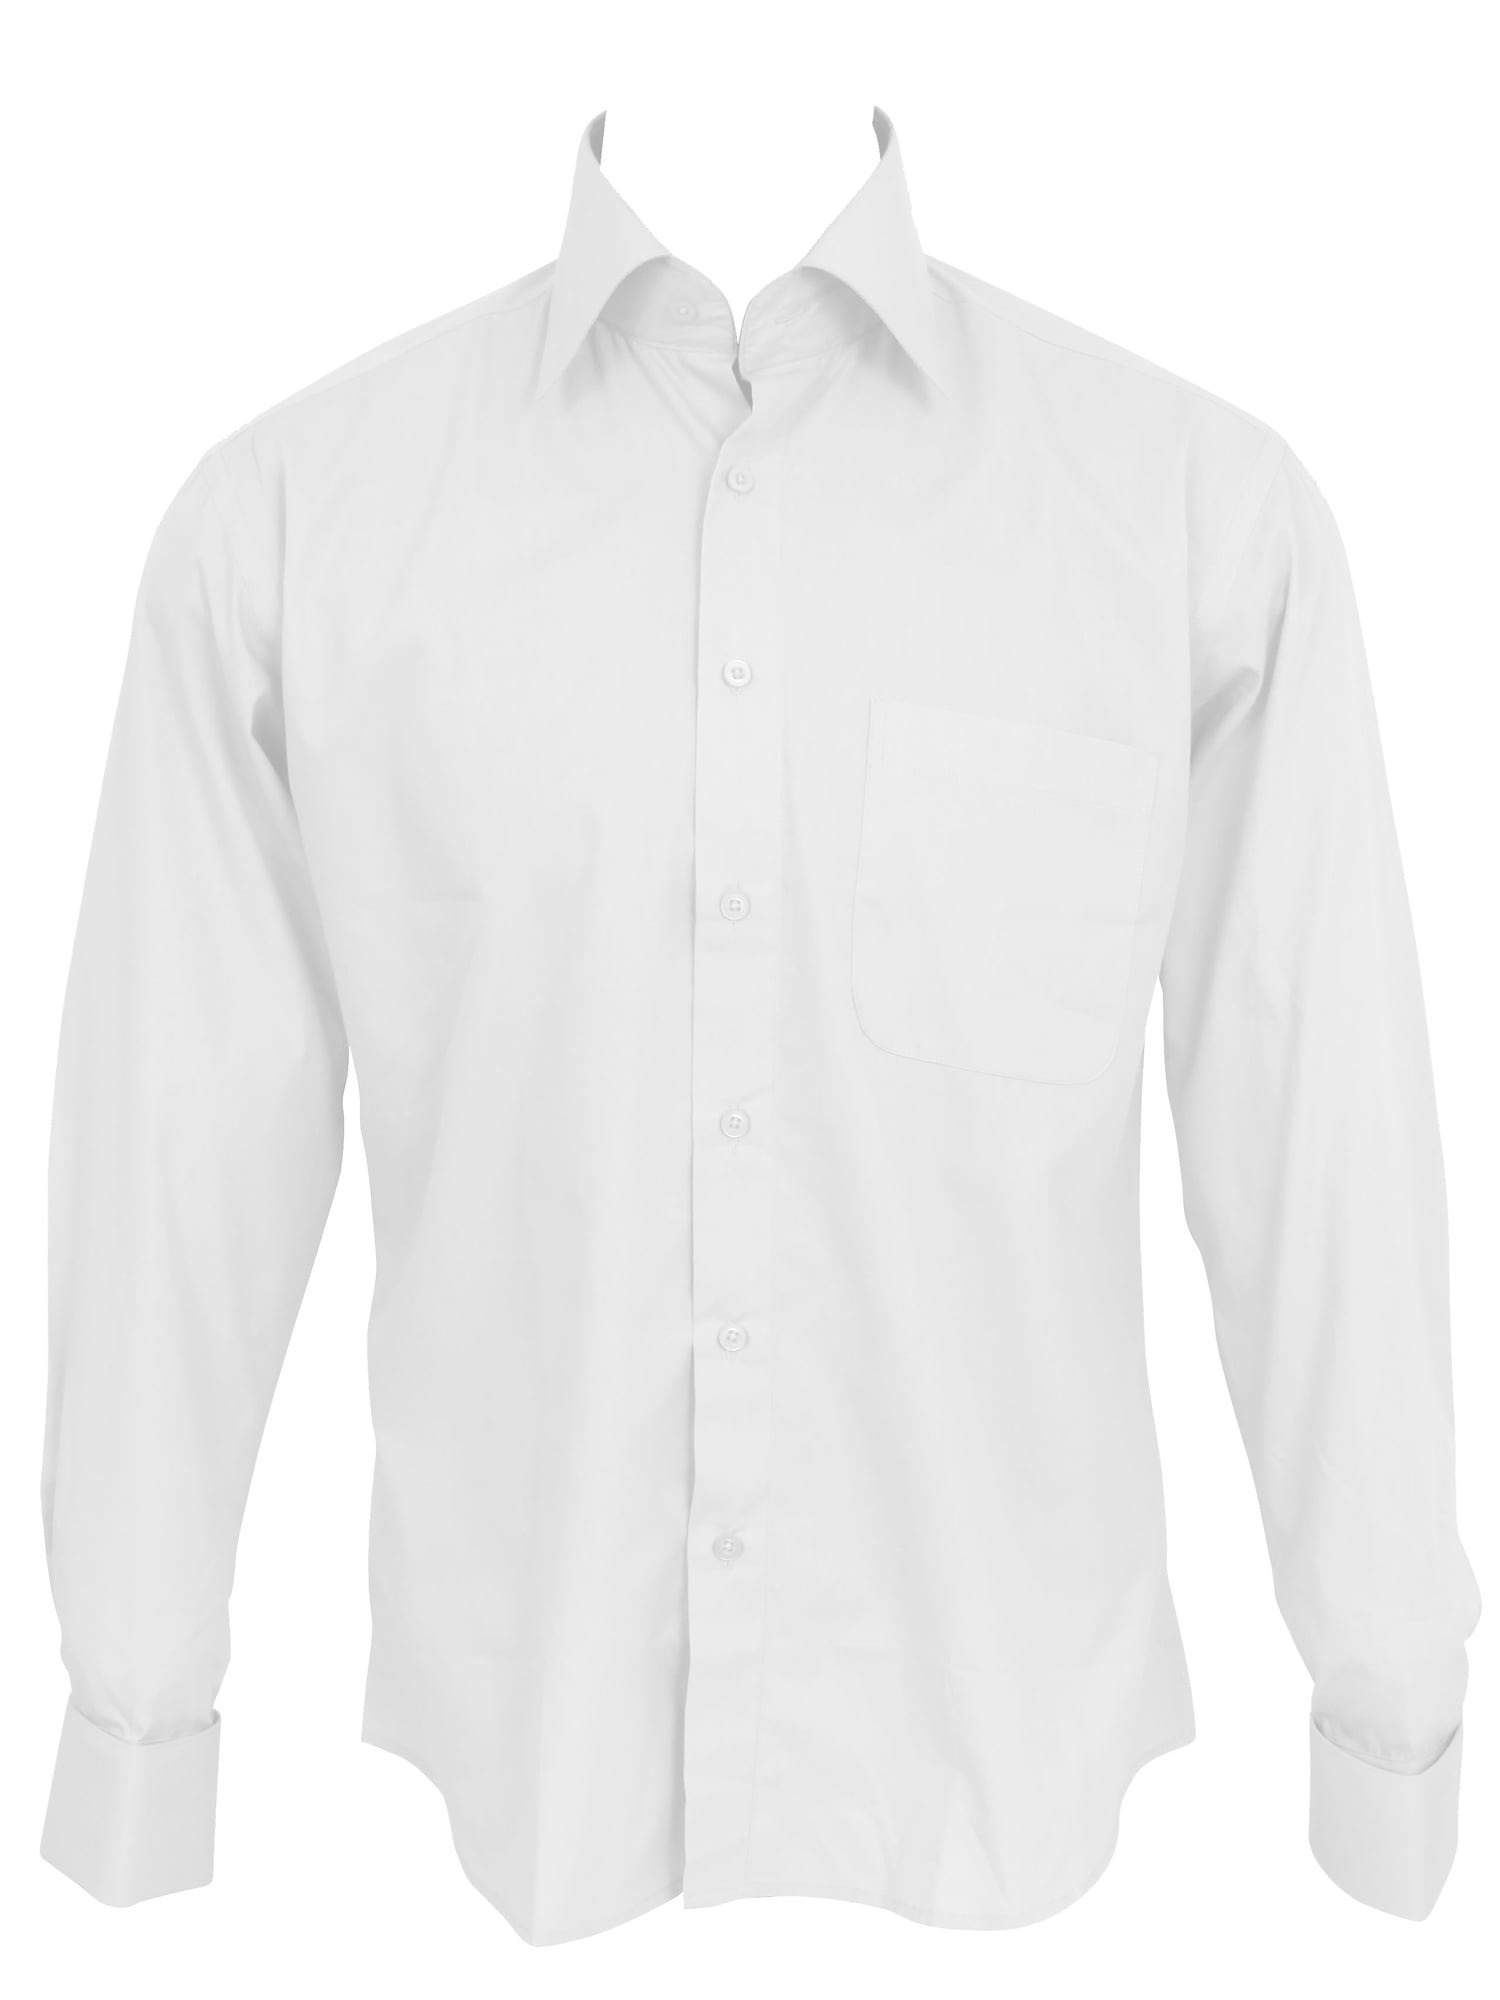 Mens Dress Shirt Ivory Off White Modern Fit Wrinkle-Free Cotton Blend Amanti 